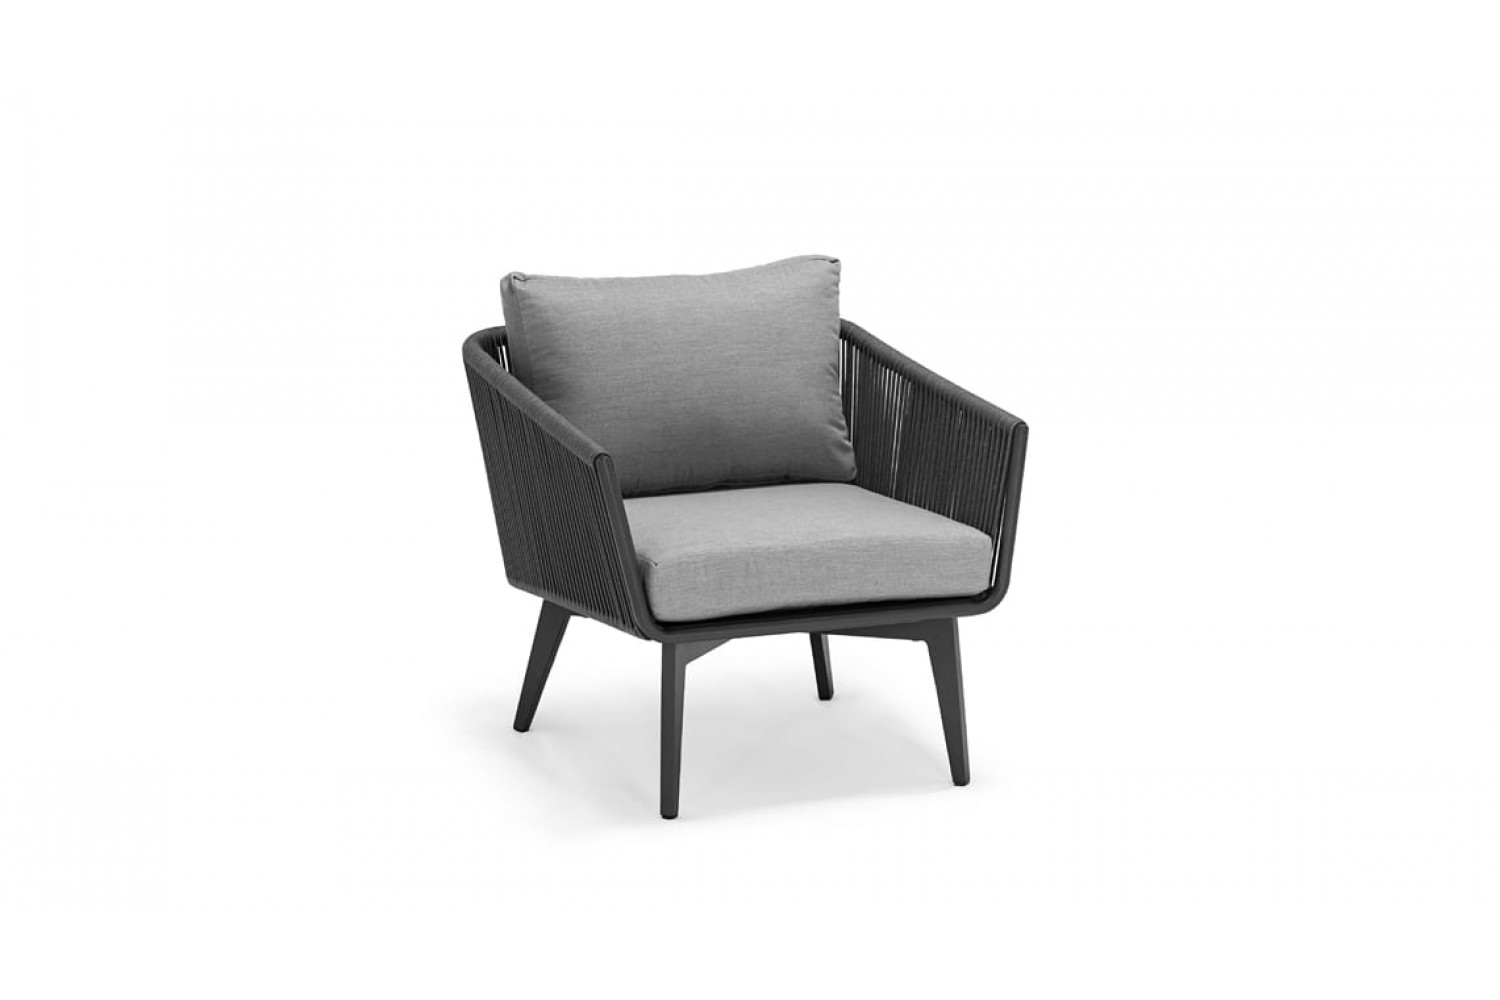 Кресло COUTURE DIVA 76 x 80 Антрацит/Серый